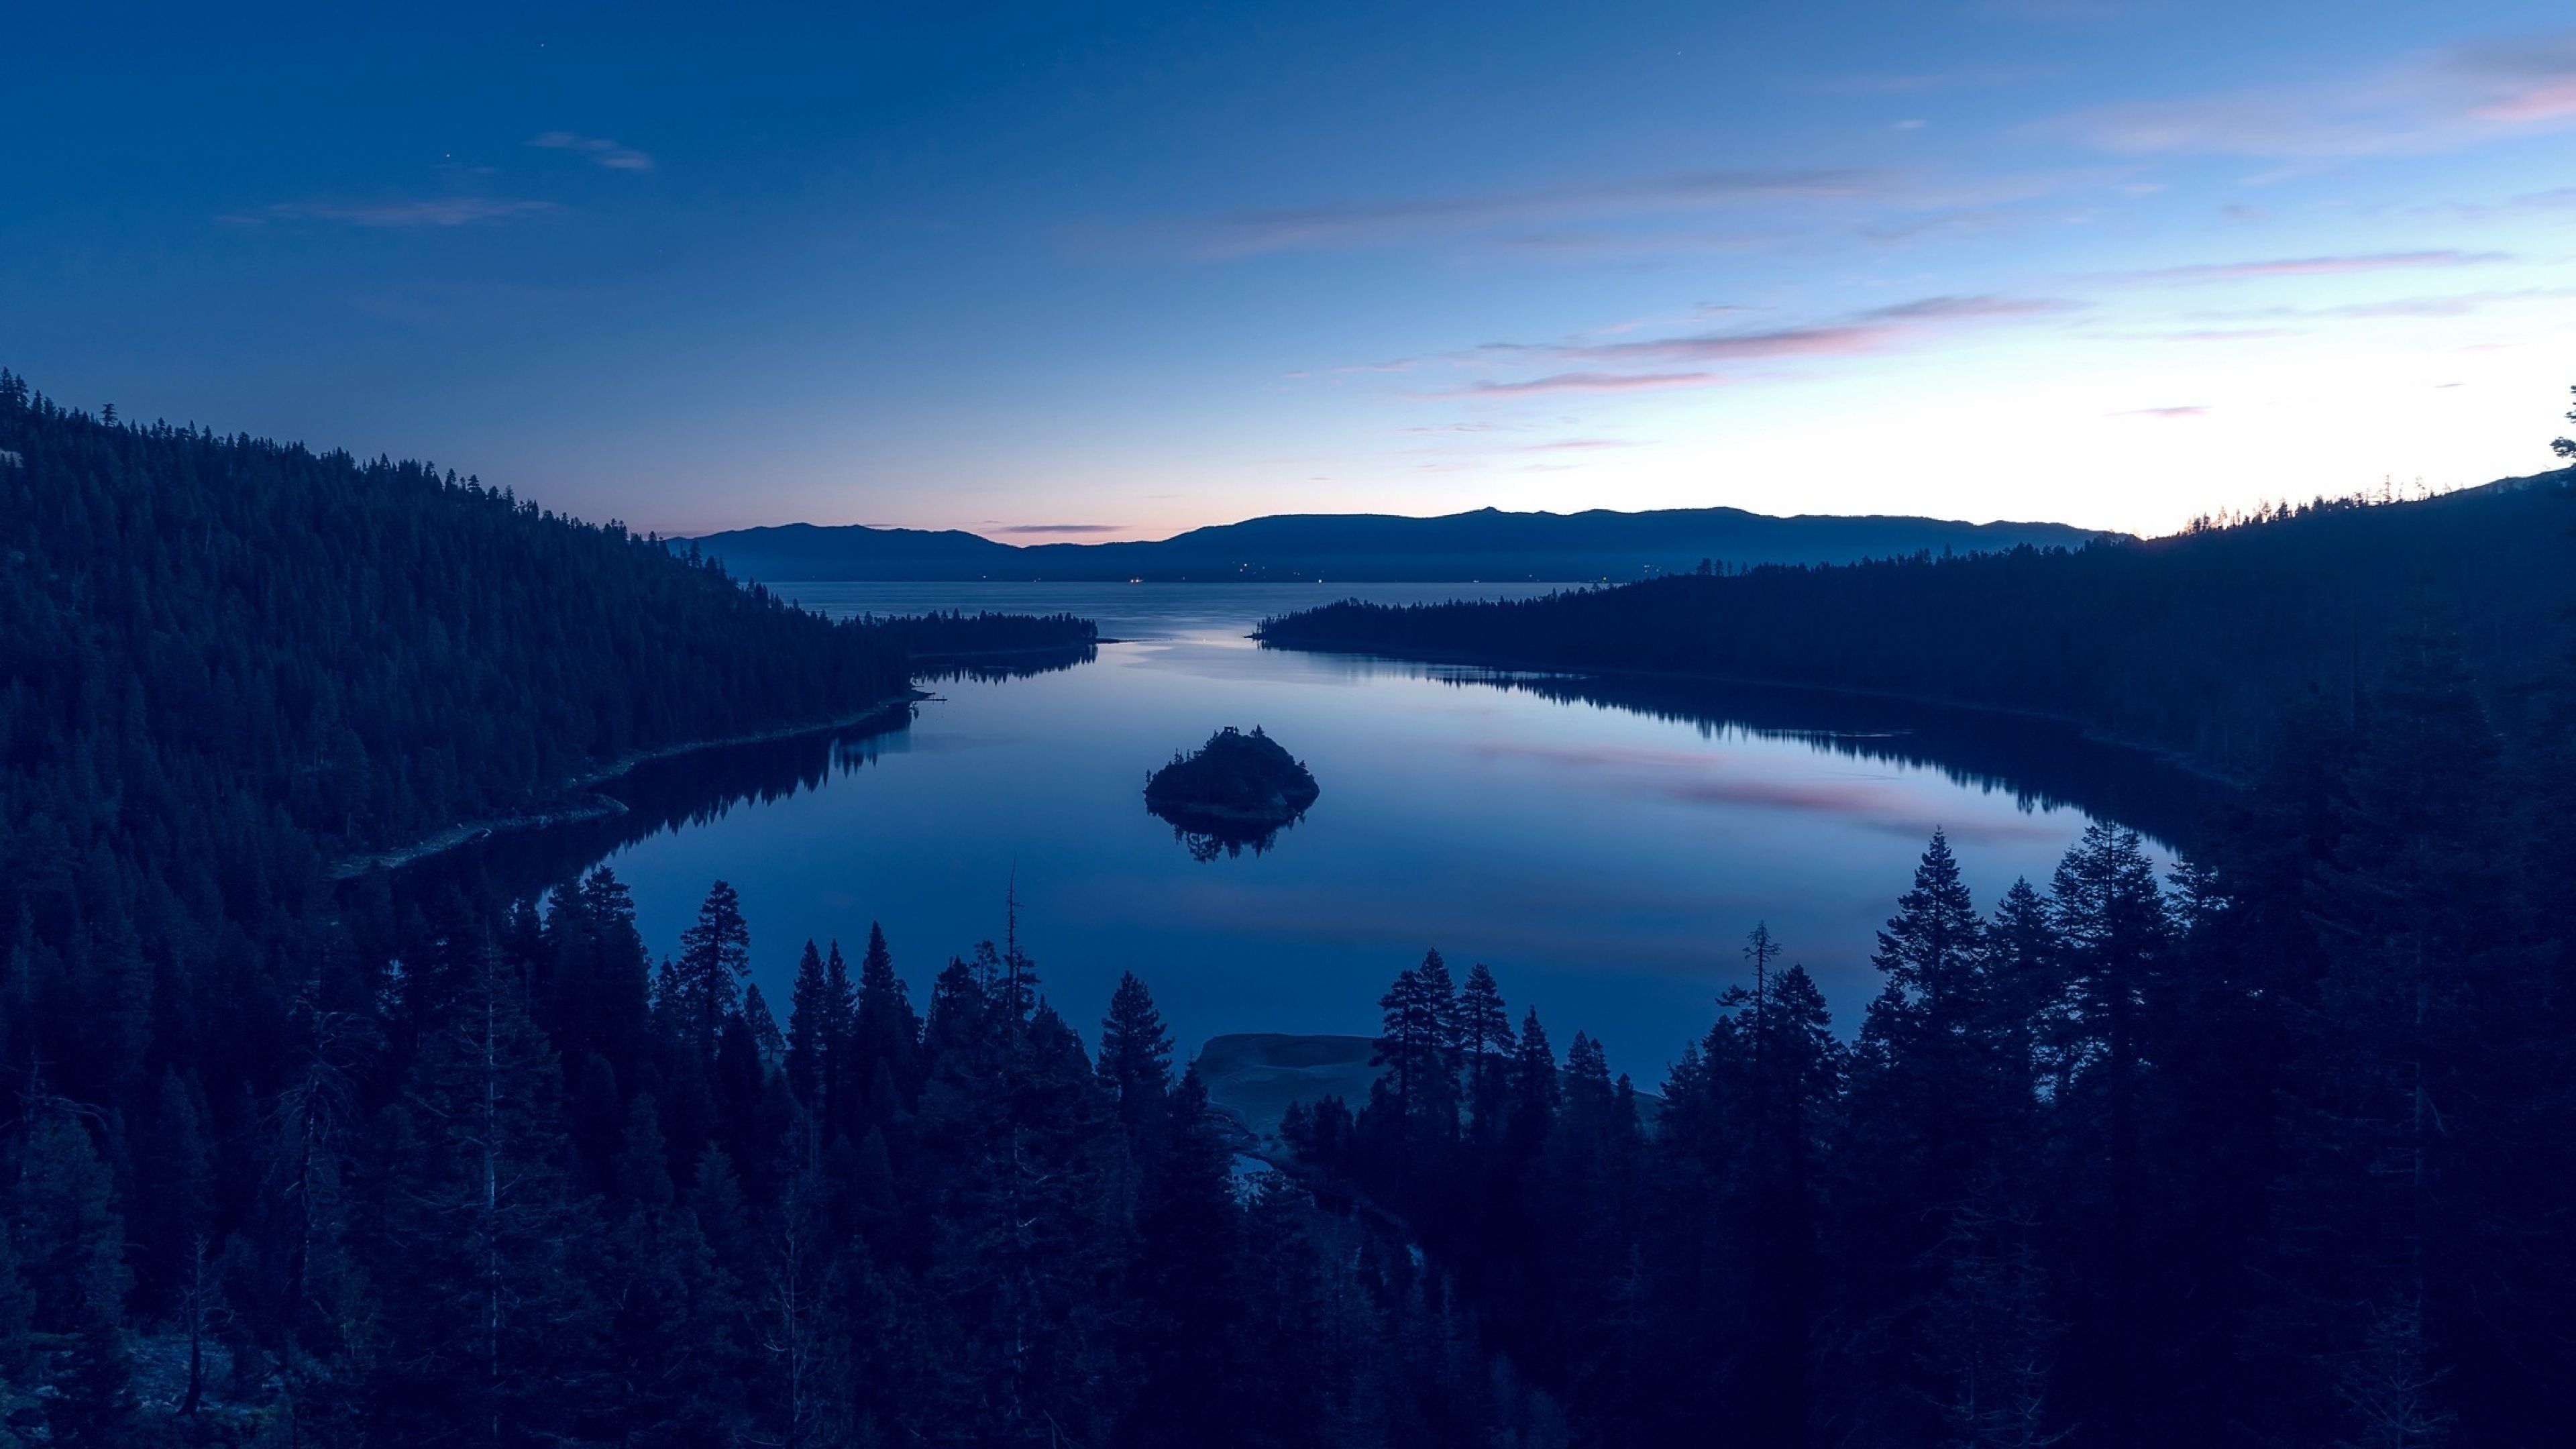 3840x2160 California Lake Tahoe 4k Wallpaper Hd Nature 4k Wallpaper Image Photo And Background